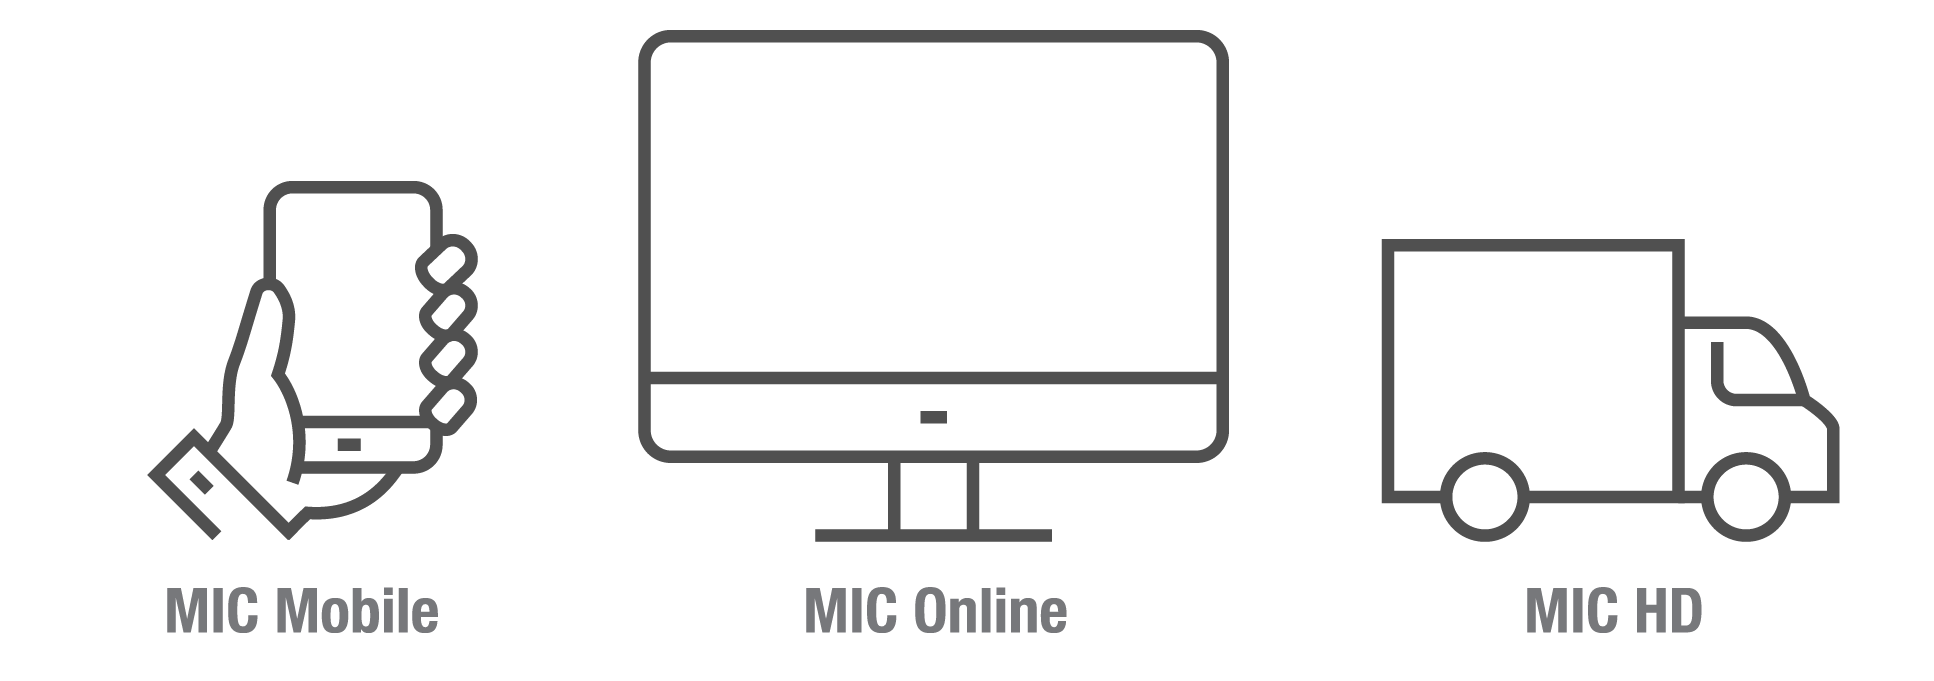 mic online family, MIC Mobile, MIC, Interactive, catalog, mic online, mic hd